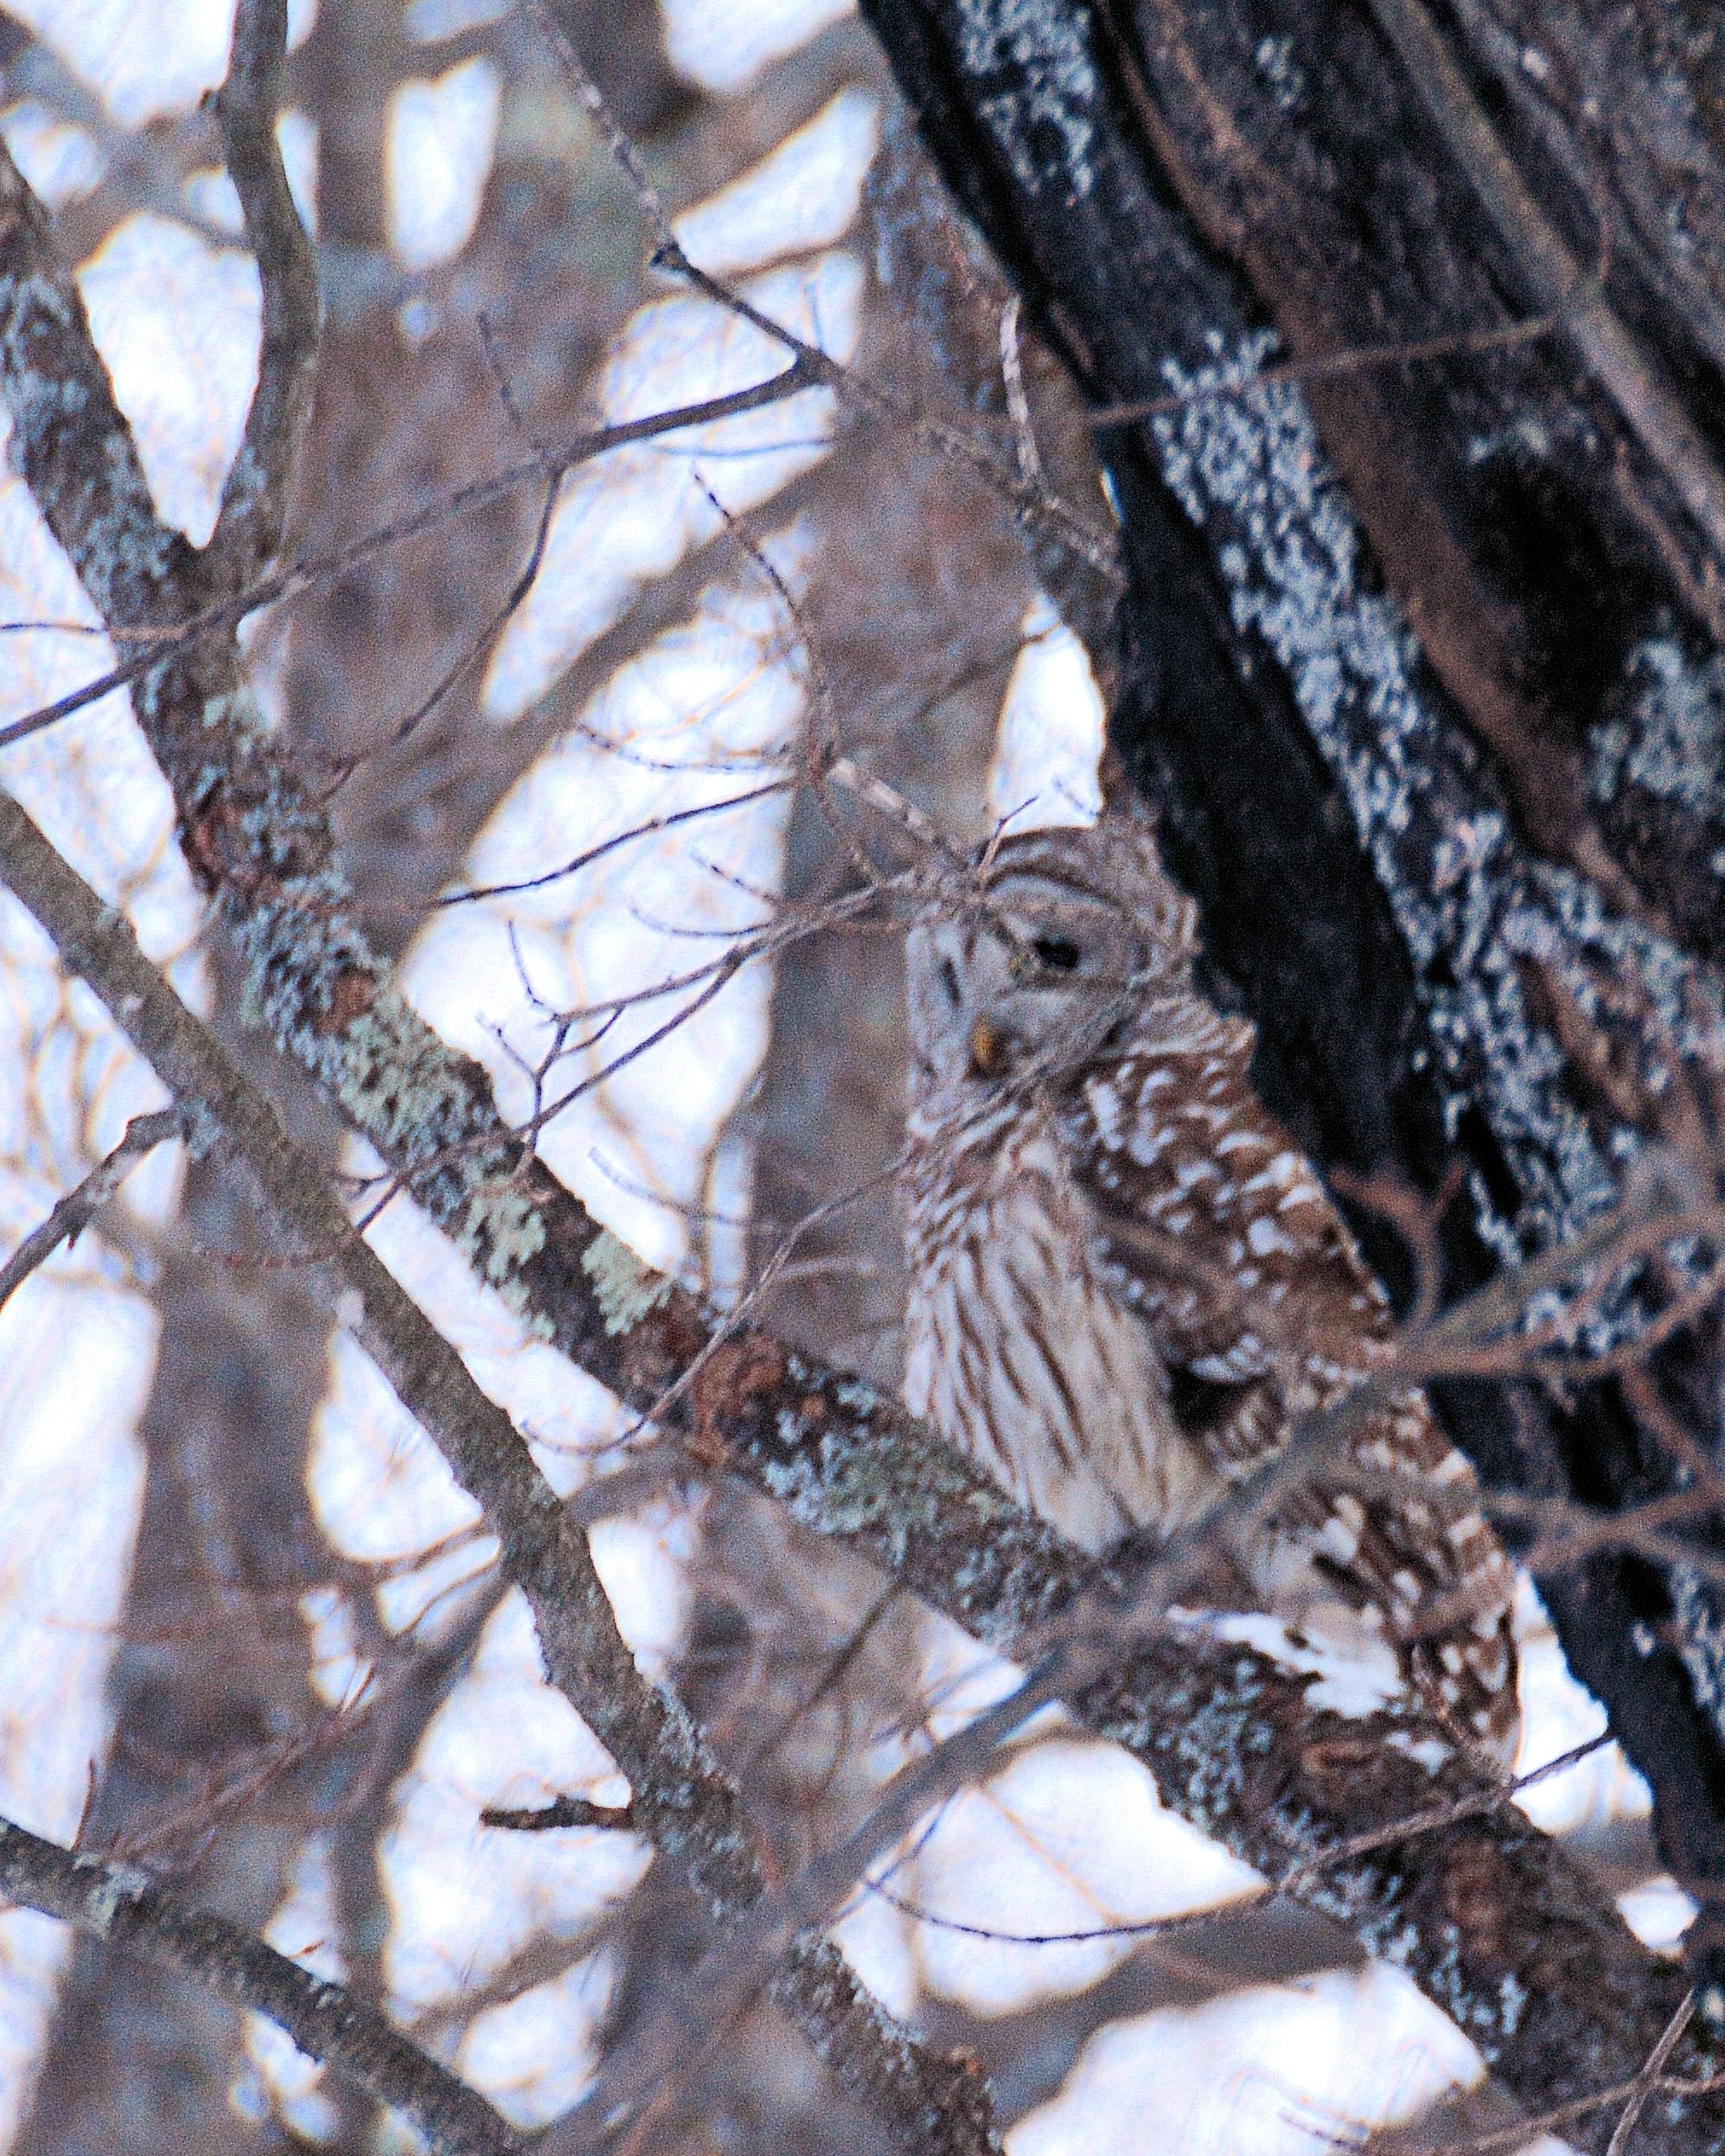 Barred Owl, photographed by Robert P. Spengler